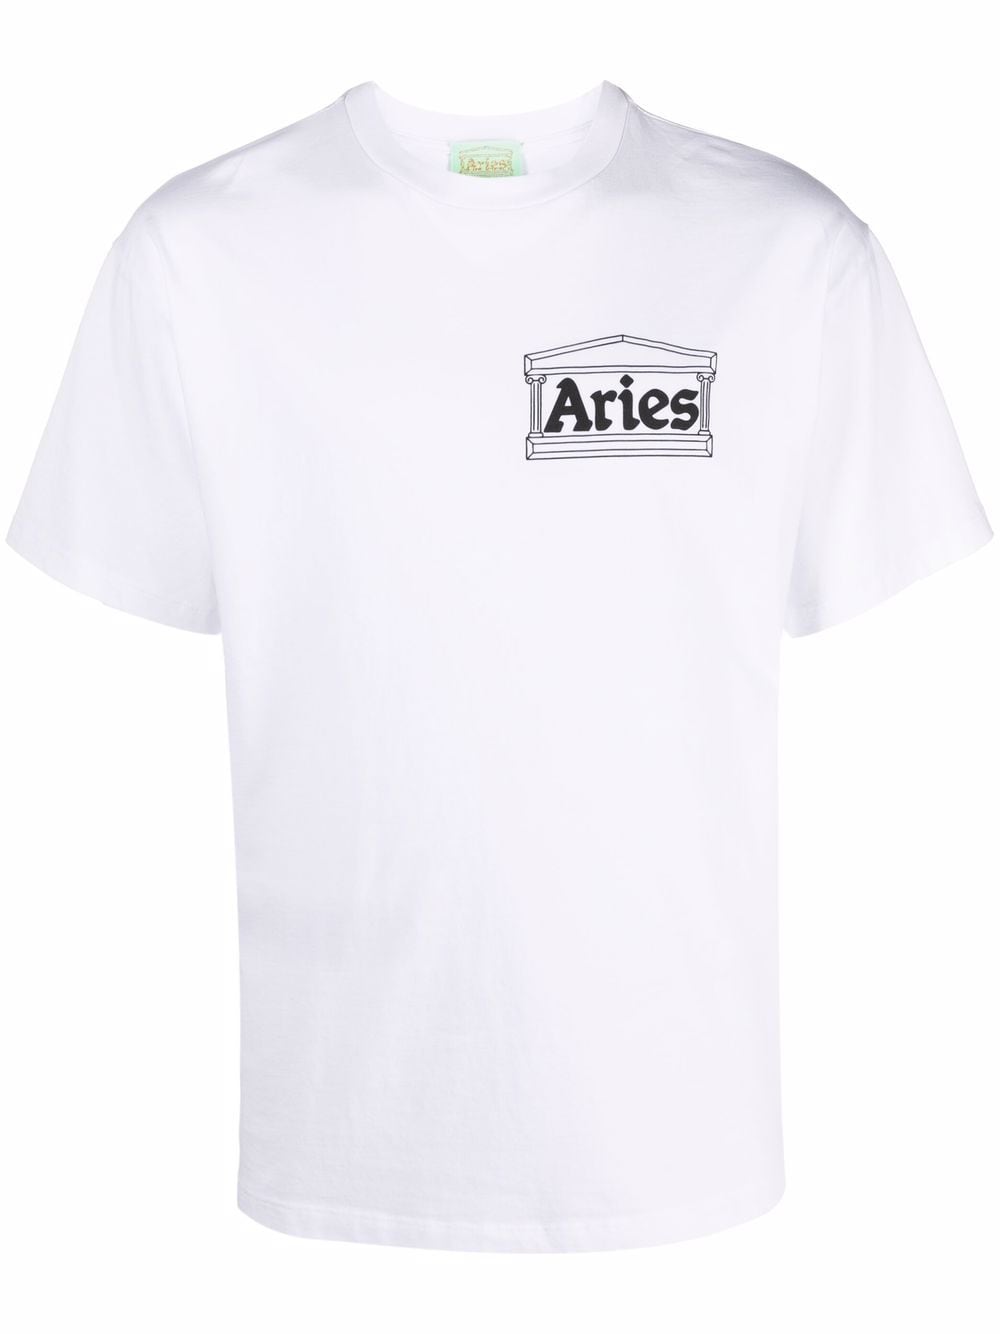 фото Aries футболка с логотипом